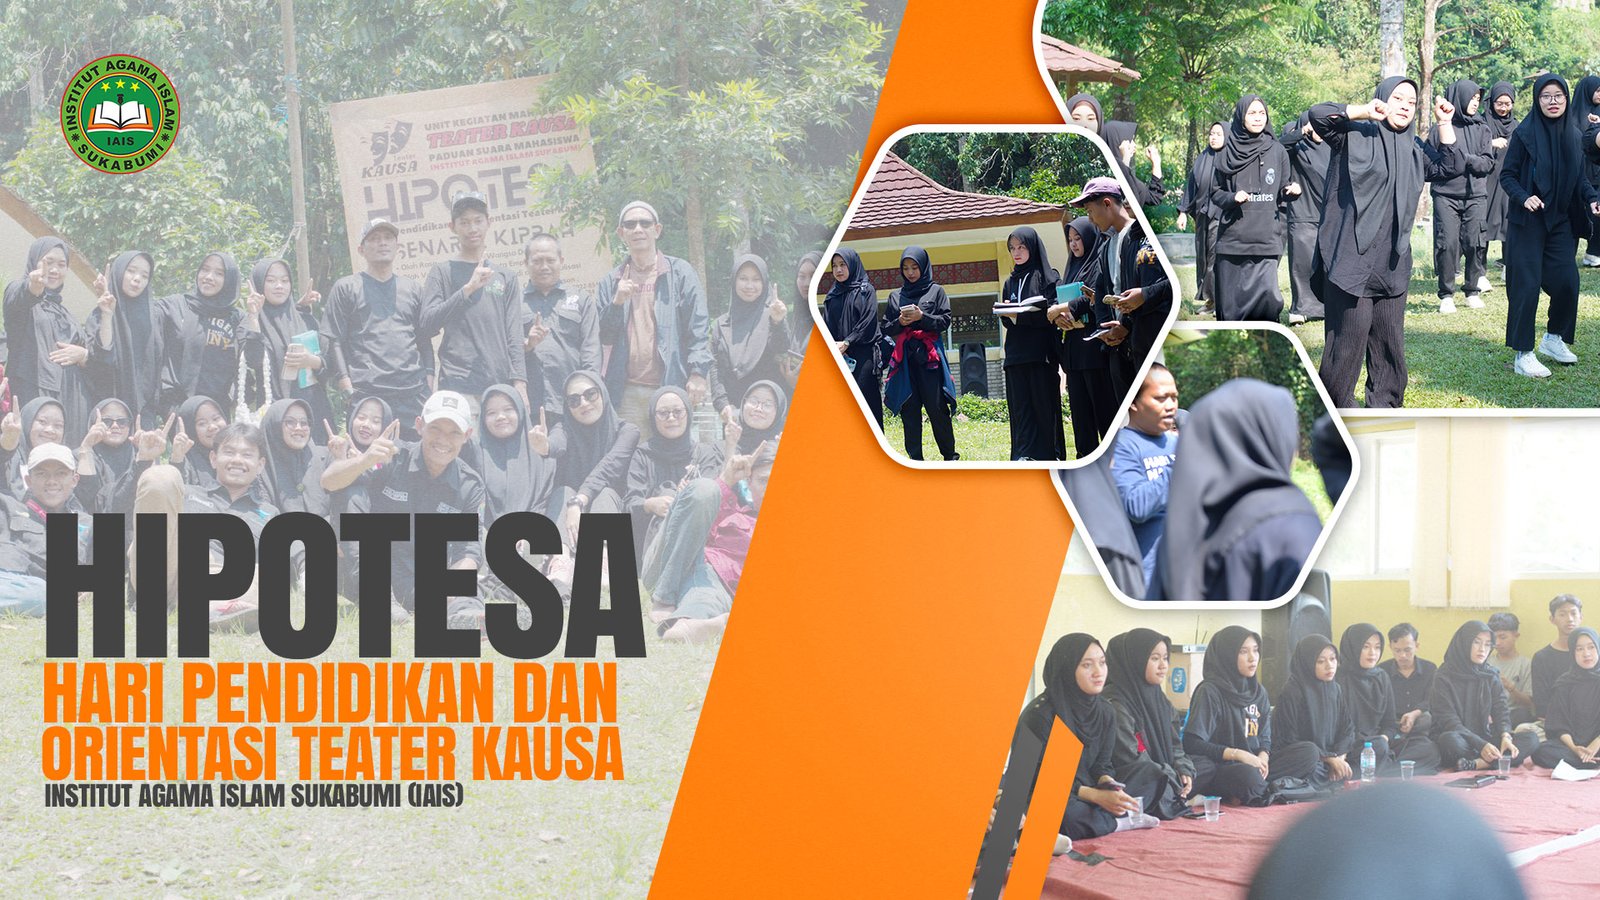 HIPOTESA (Hari pendidikan dan orientasi teater kausa) Institut Agama Islam Sukabumi (IAIS)